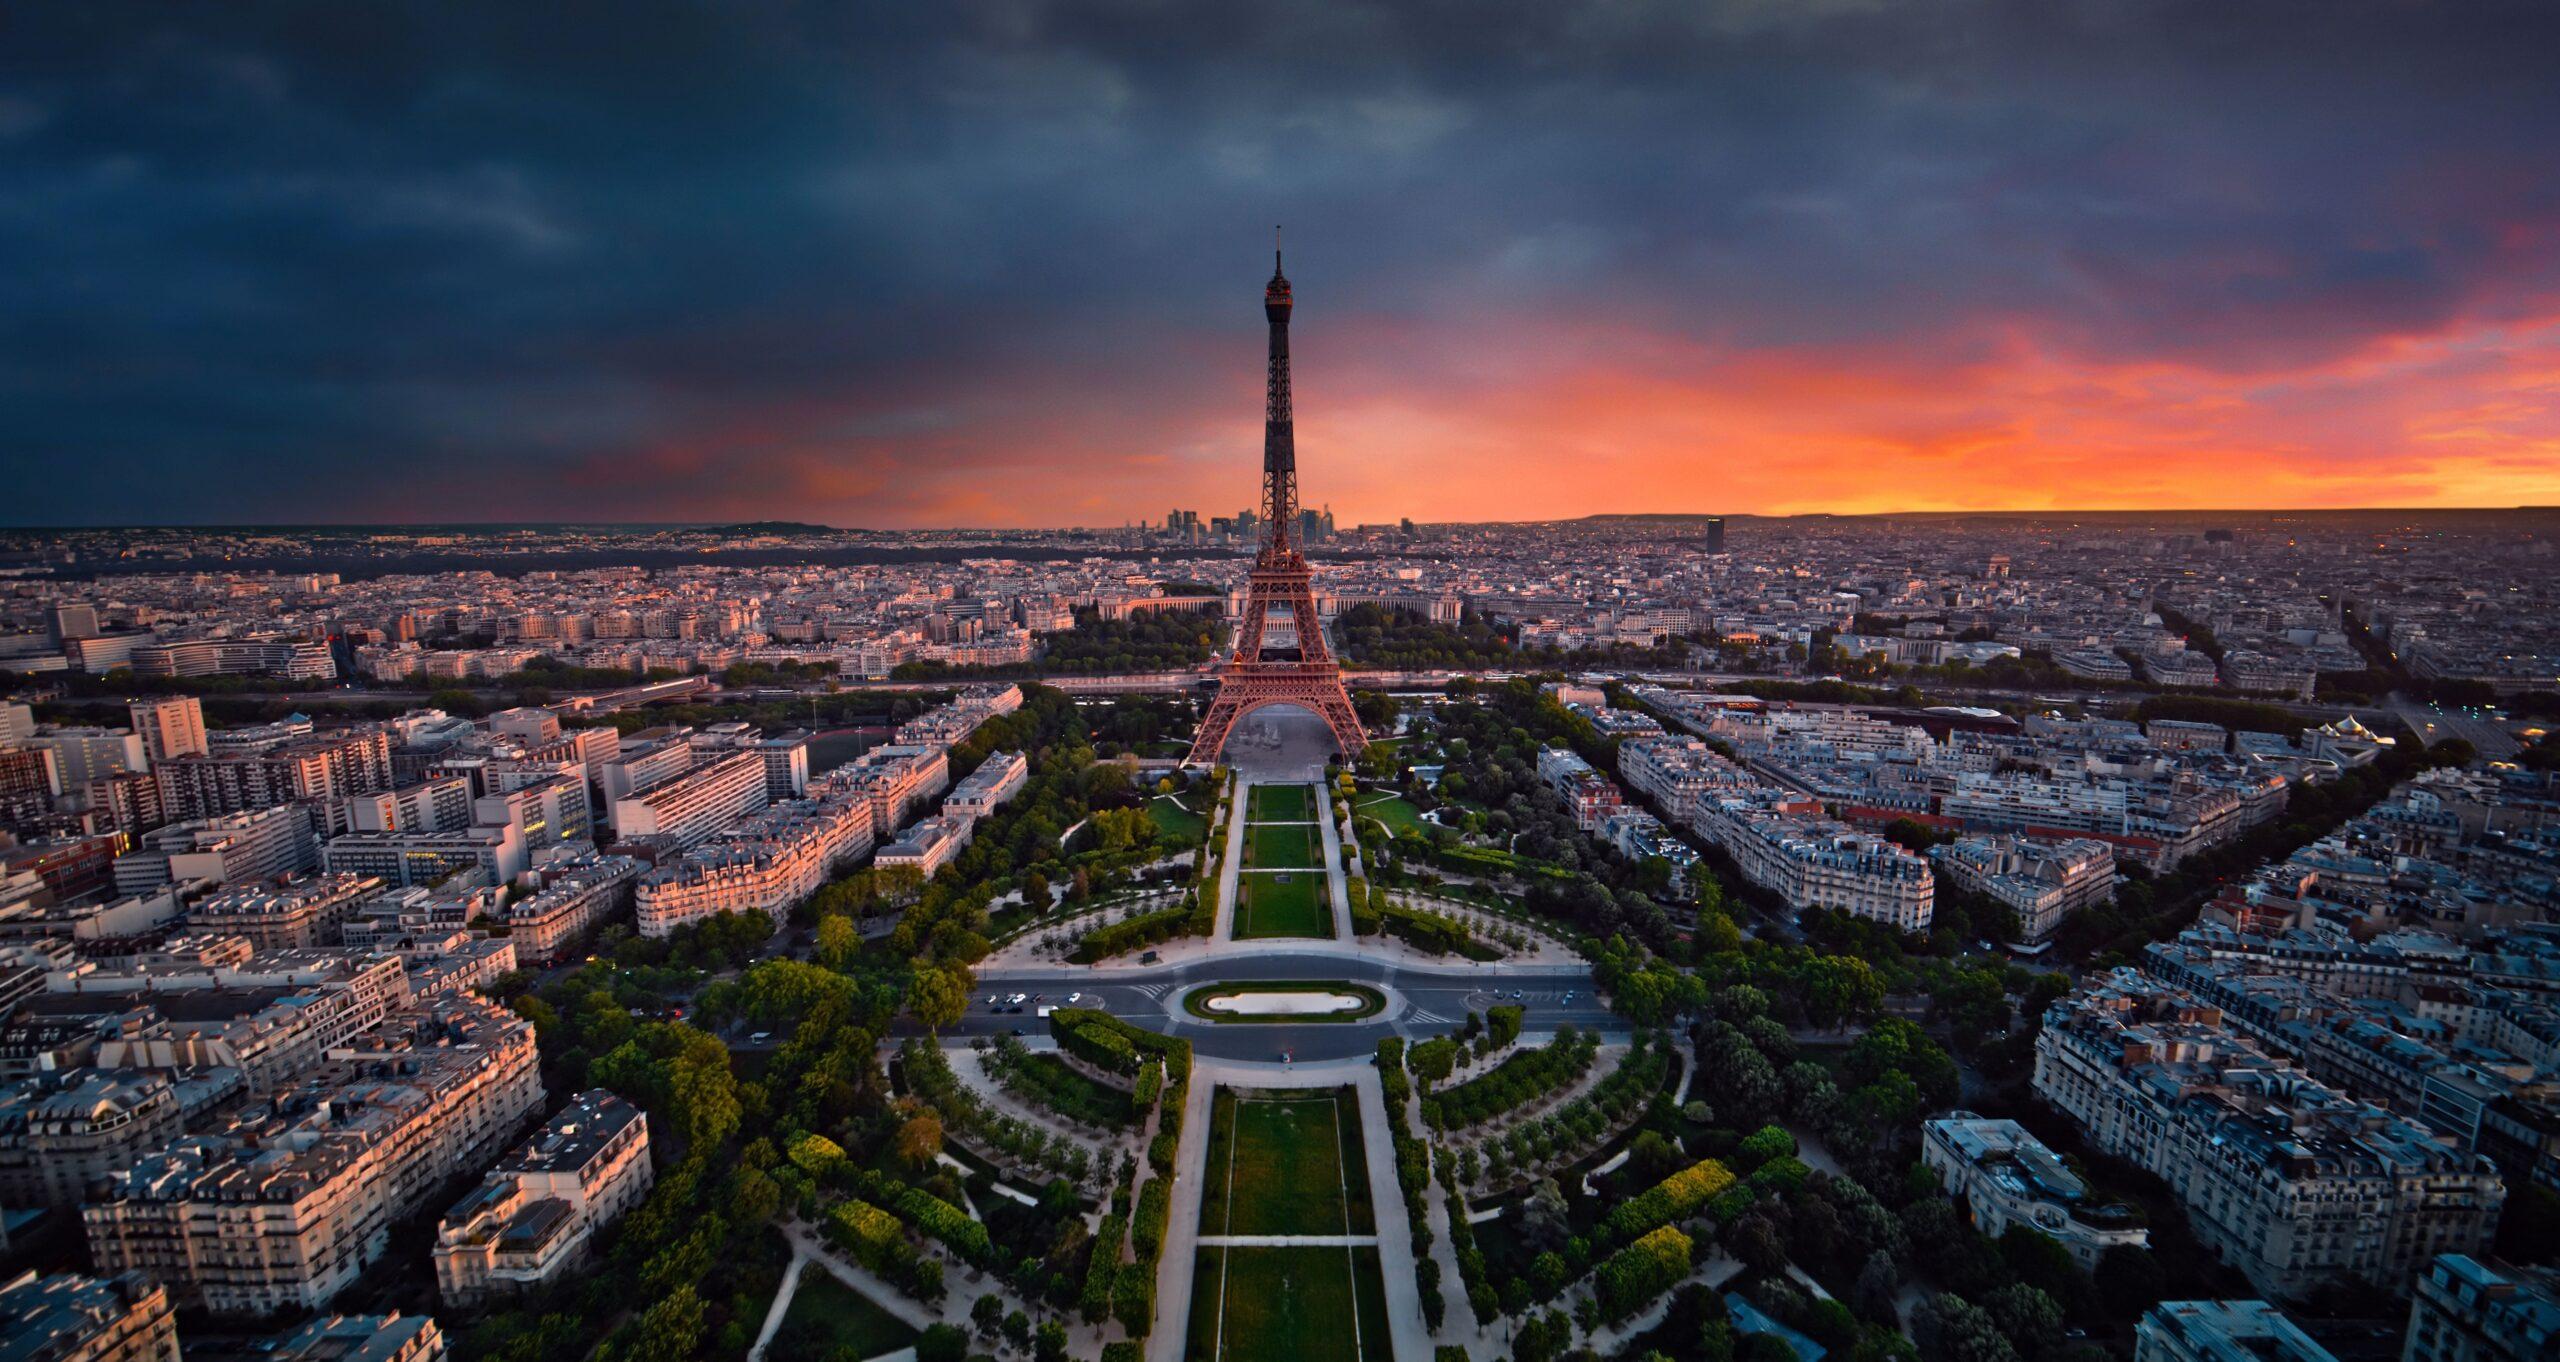 Paris' skyline captured at sunset.